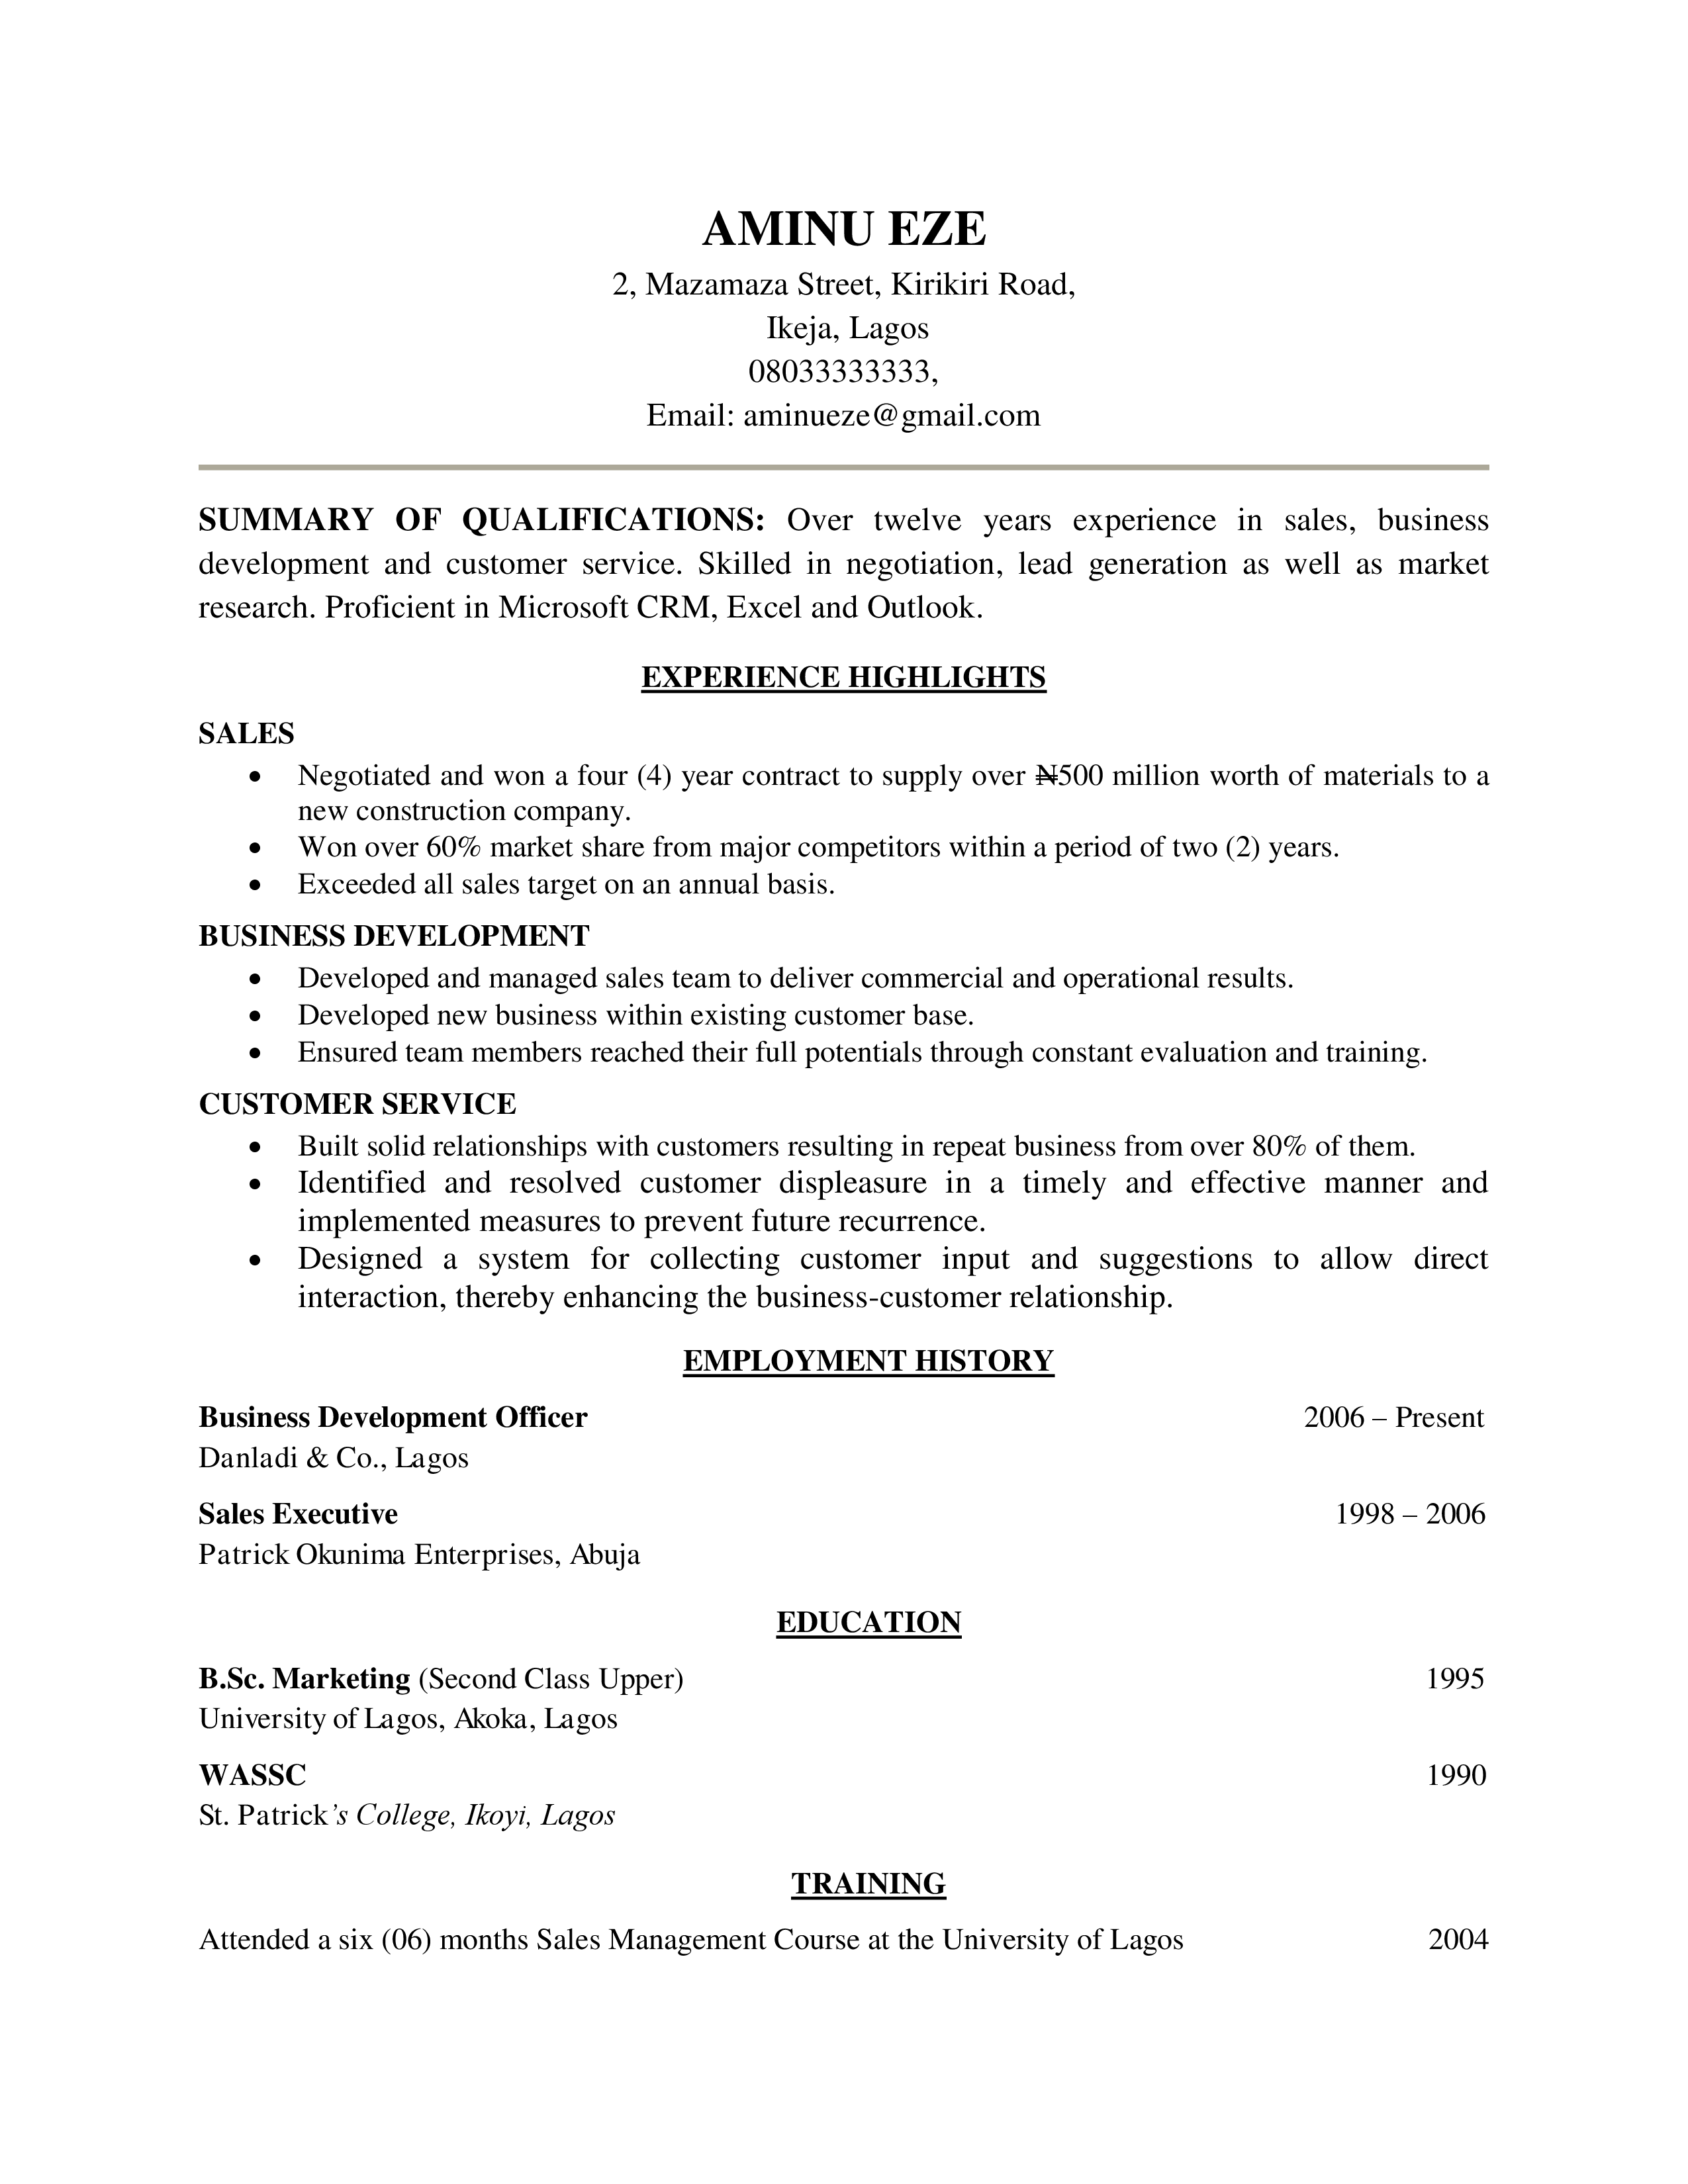 Entry level computer engineer resume sample